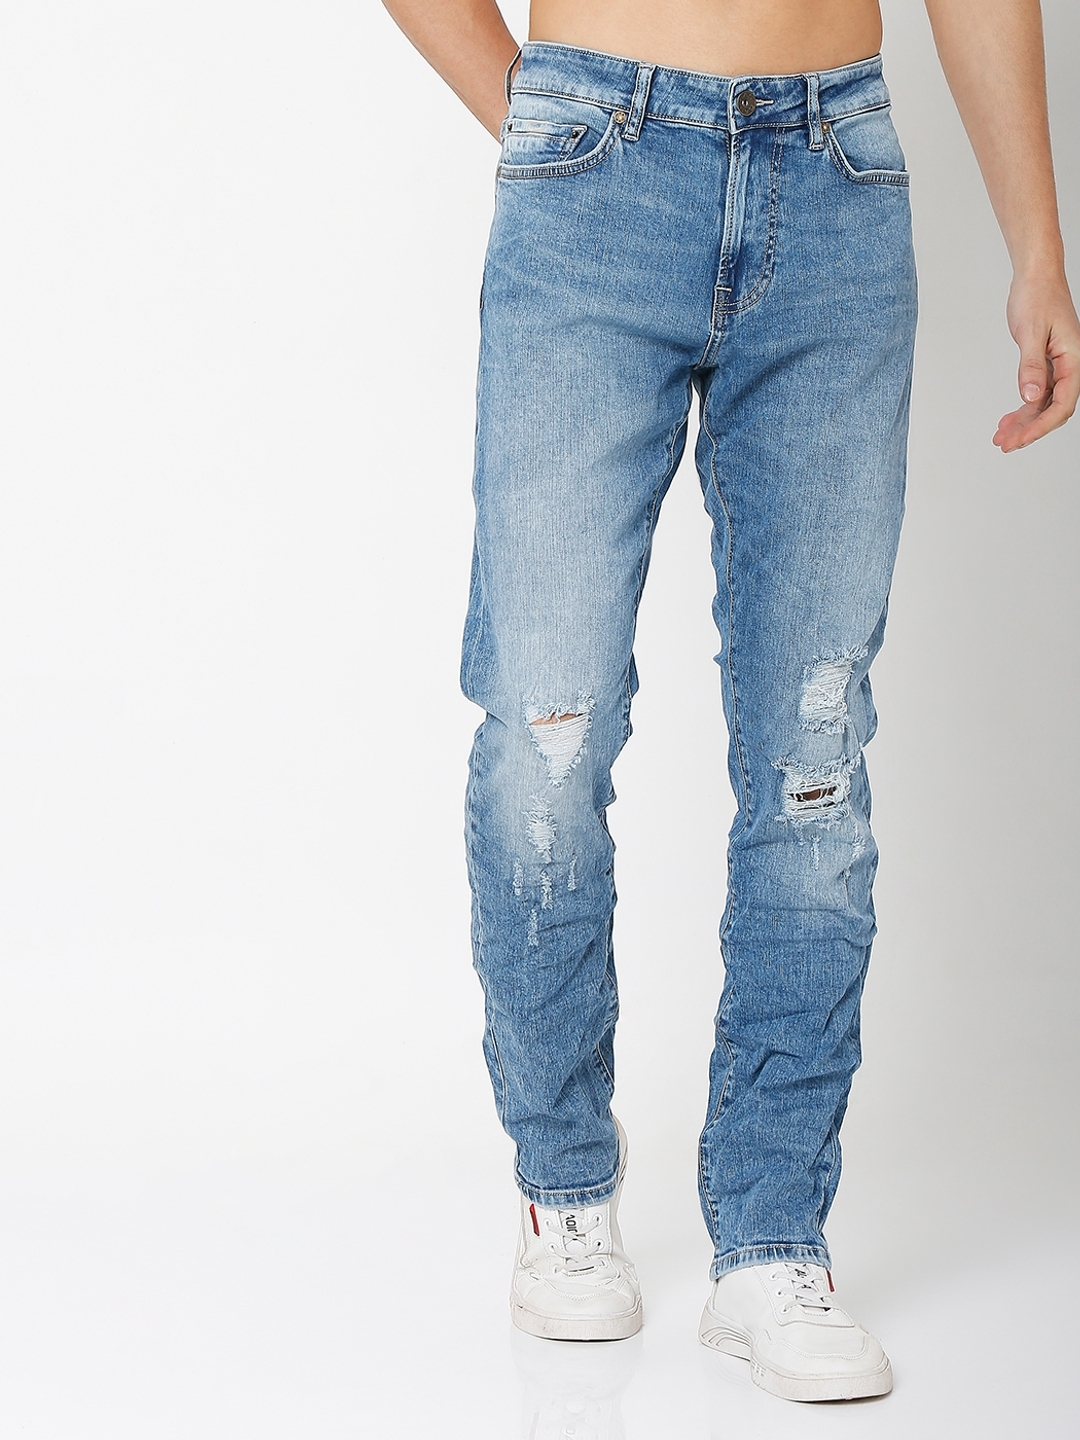 Buy Men Navy Mid Wash Slim Tapered Jeans Online - 773946 | Peter England